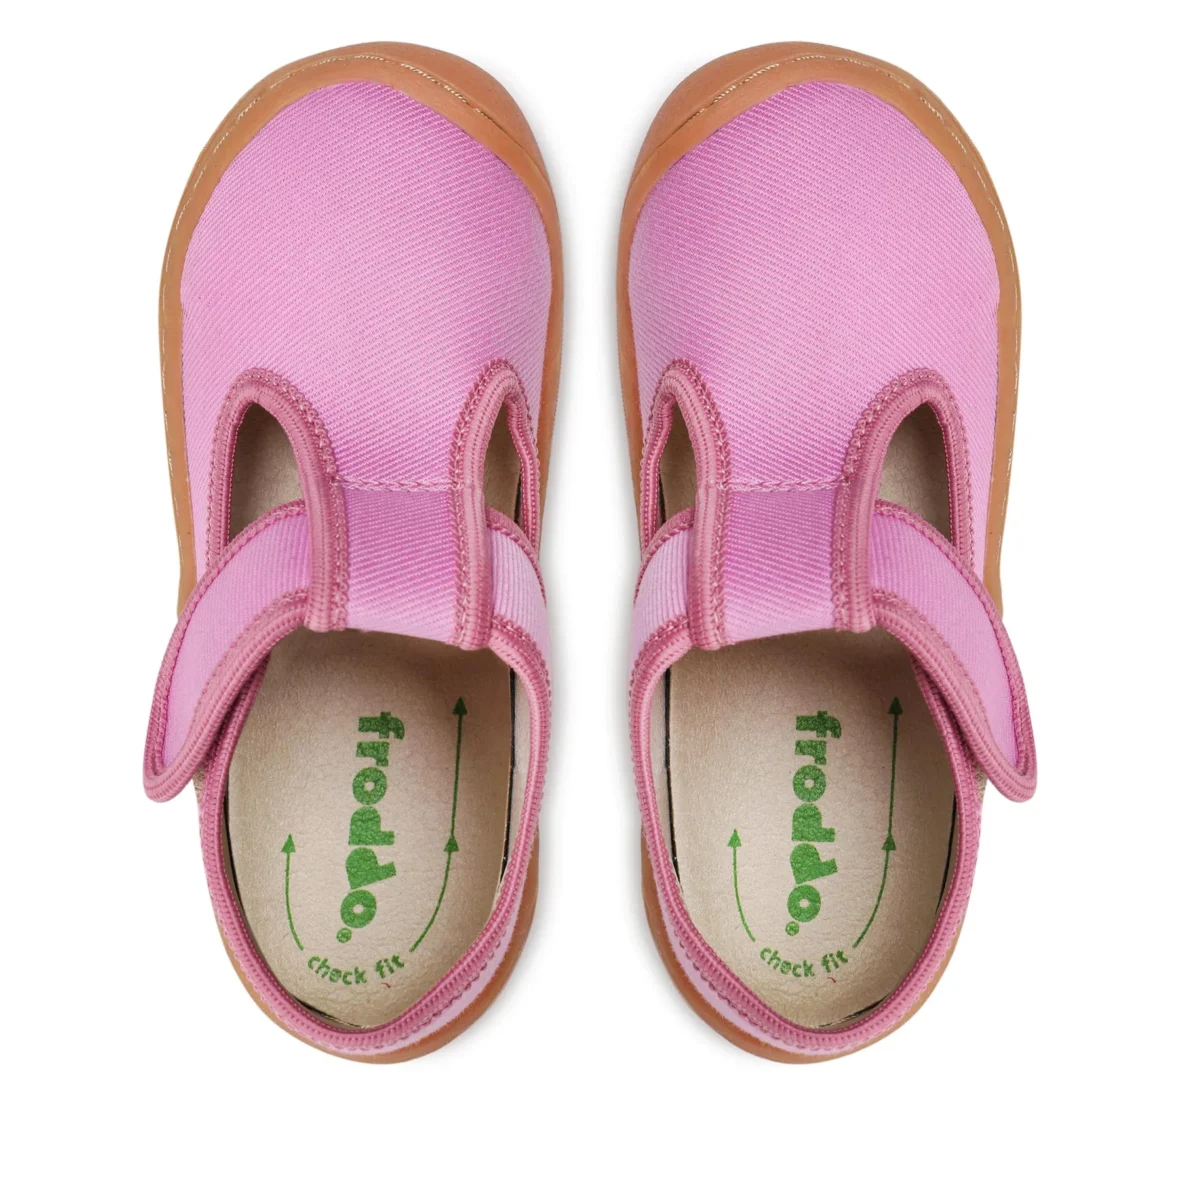 papuce-froddo-g1700305-2-s-pink (1)